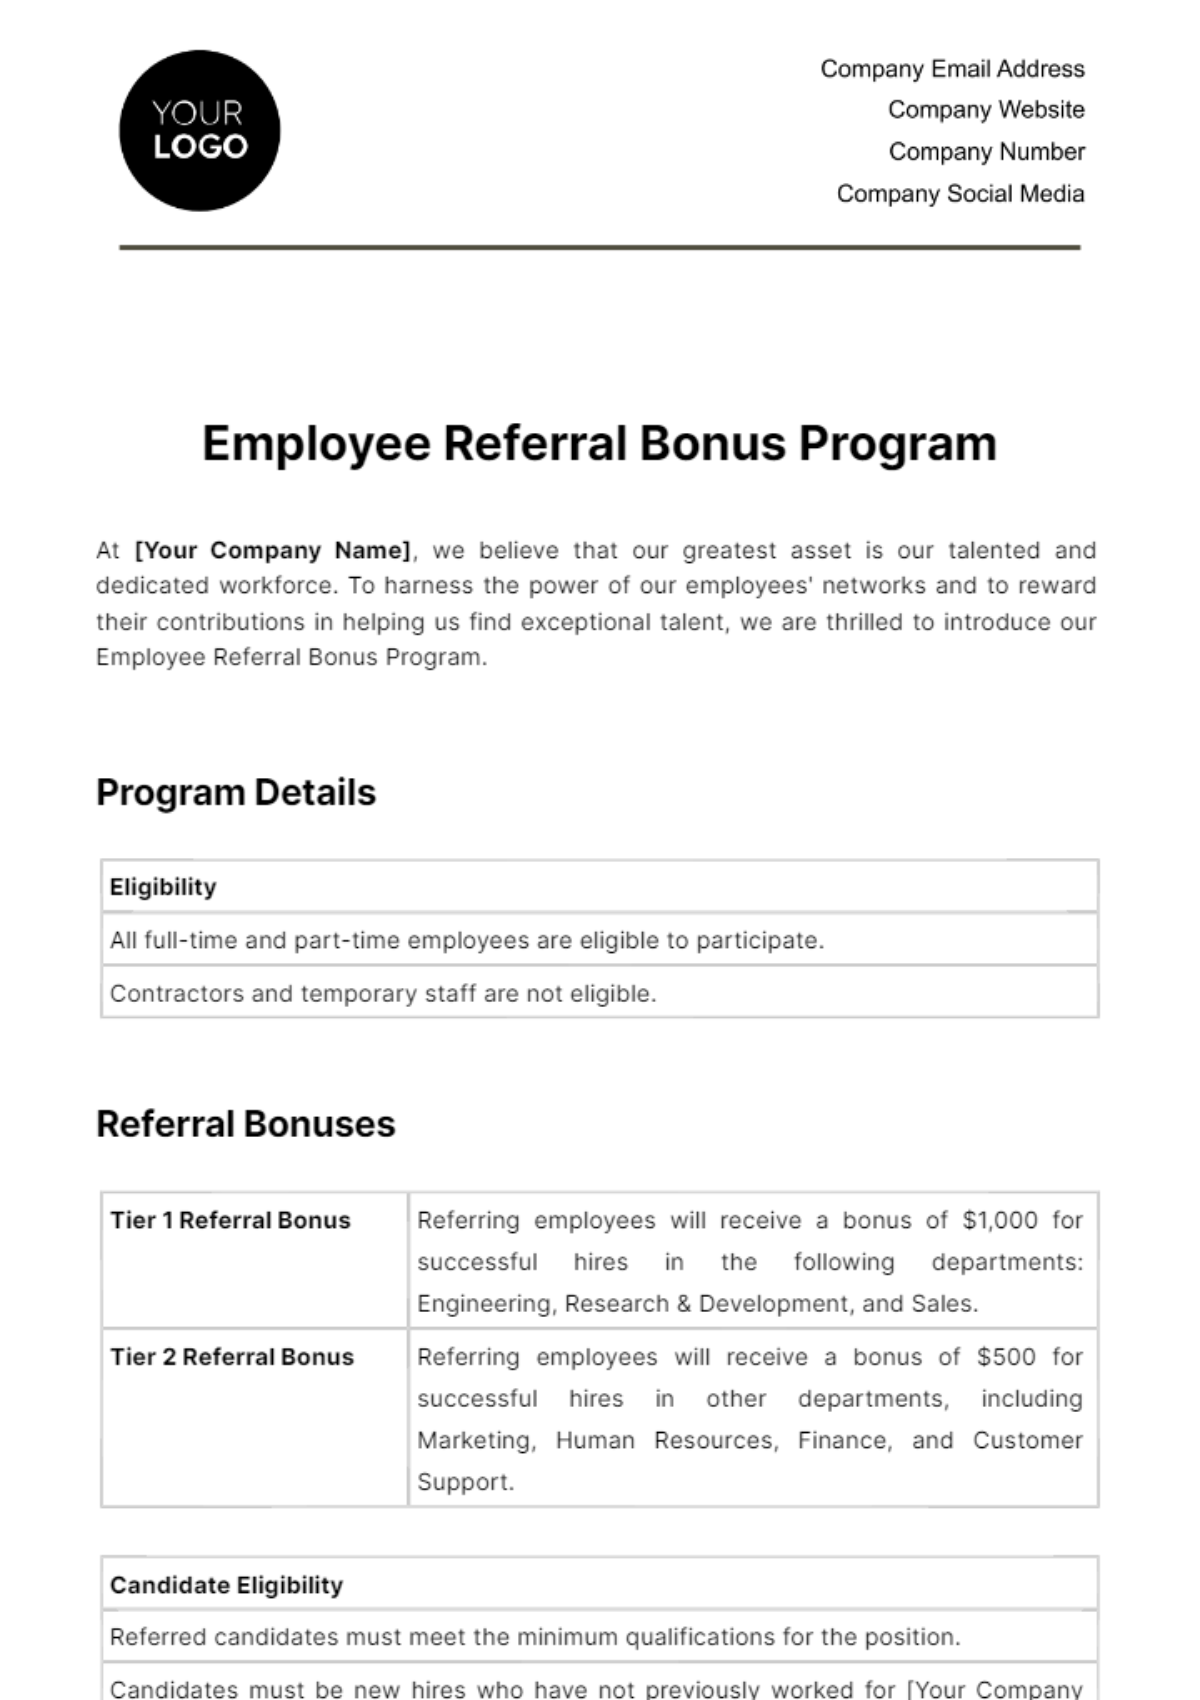 Free Employee Referral Bonus Program HR Template